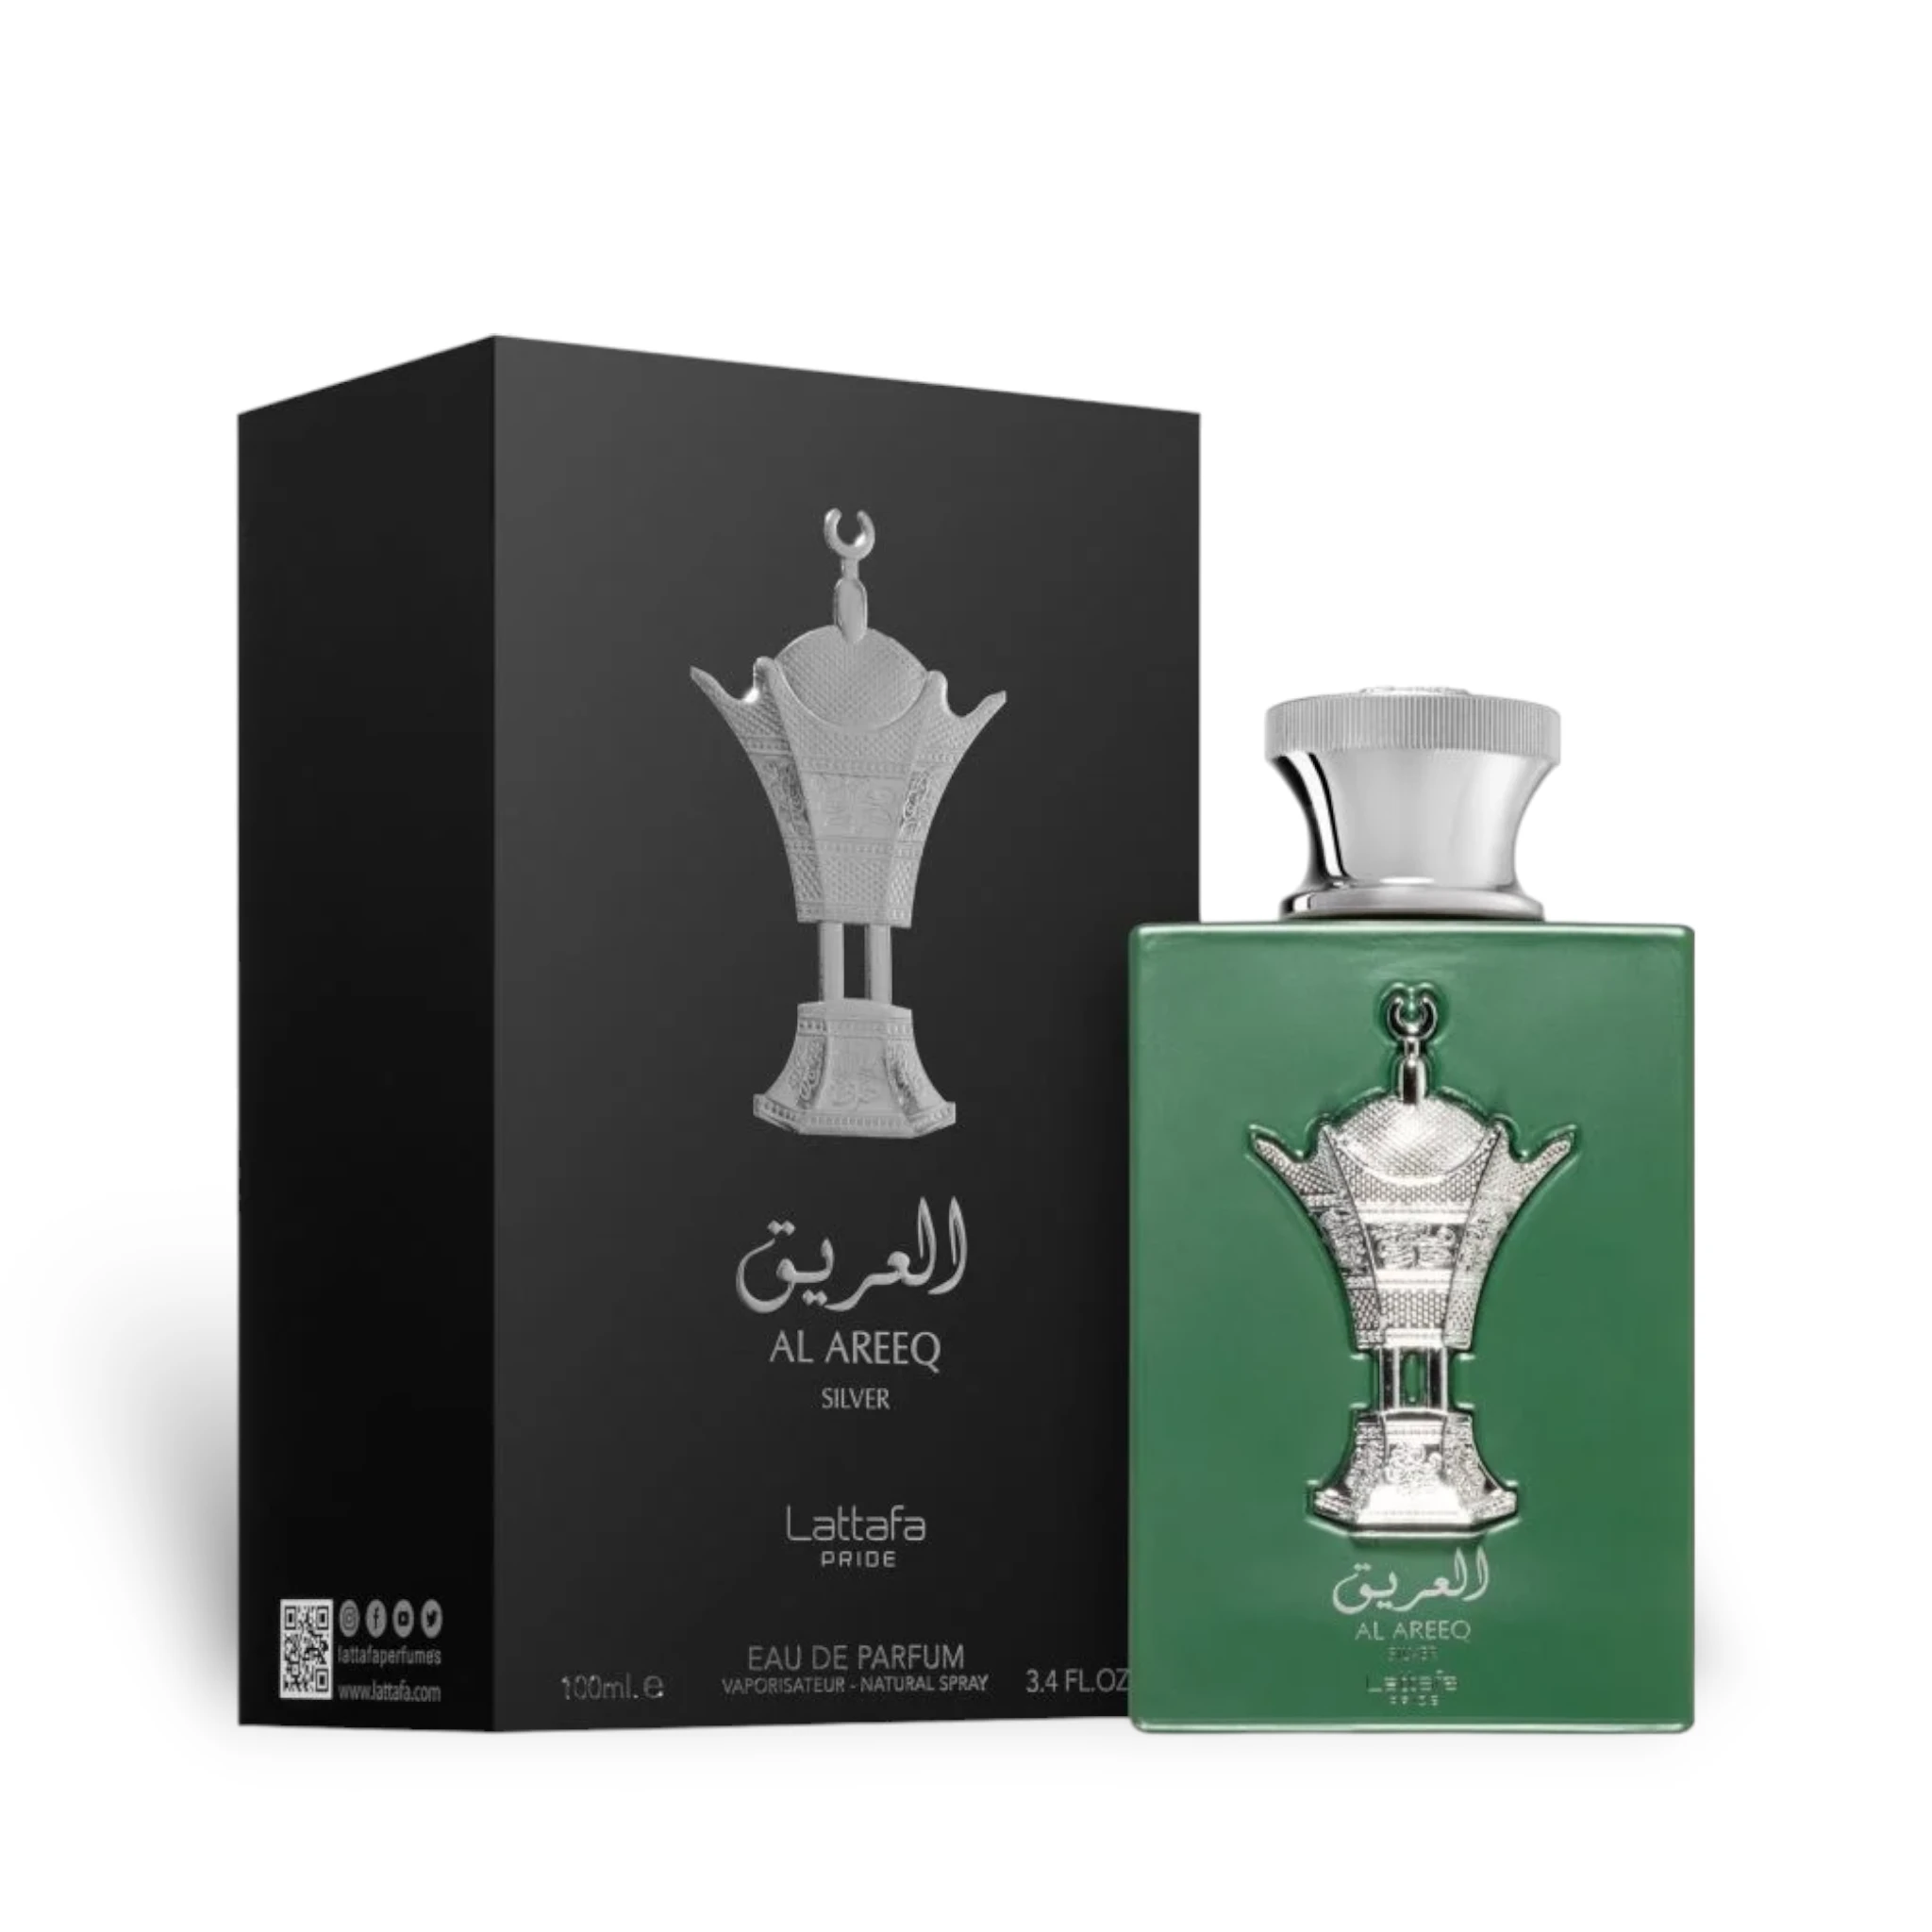 Al Areeq Silver Perfume Eau De Parfum 100Ml By Lattafa Pride 